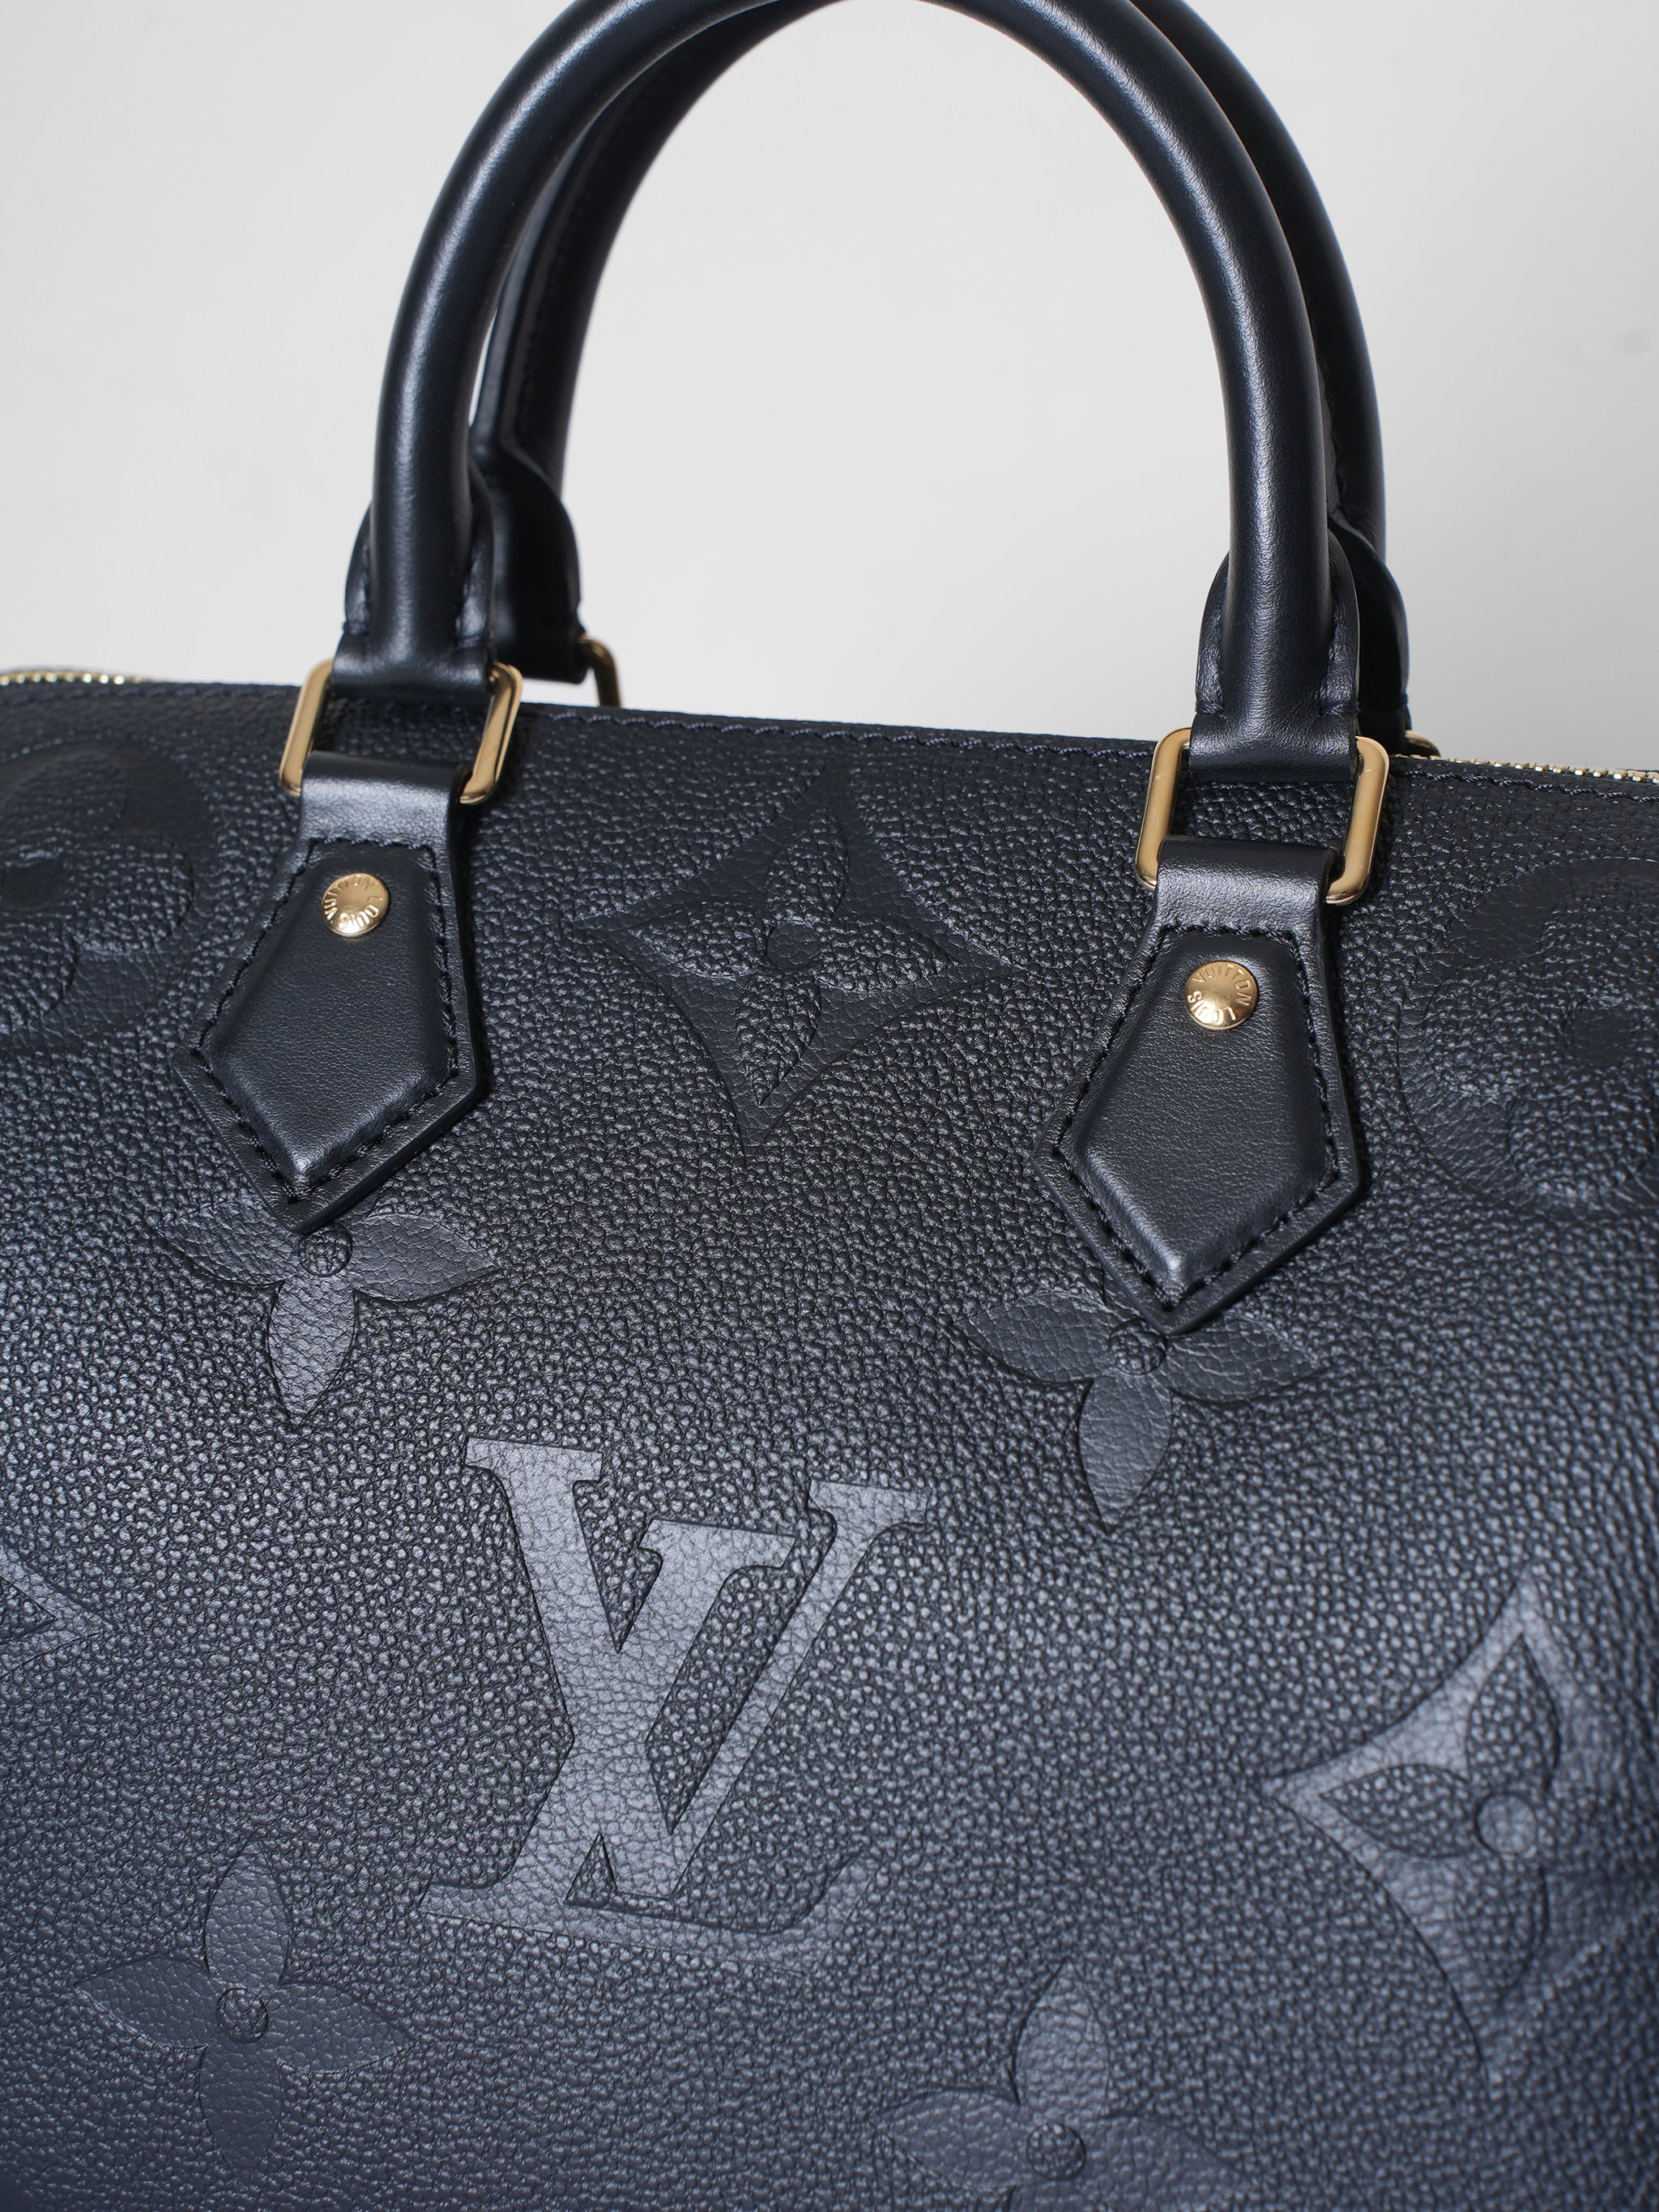 New Louis Vuitton Speedy Bandouliere 20 Bag